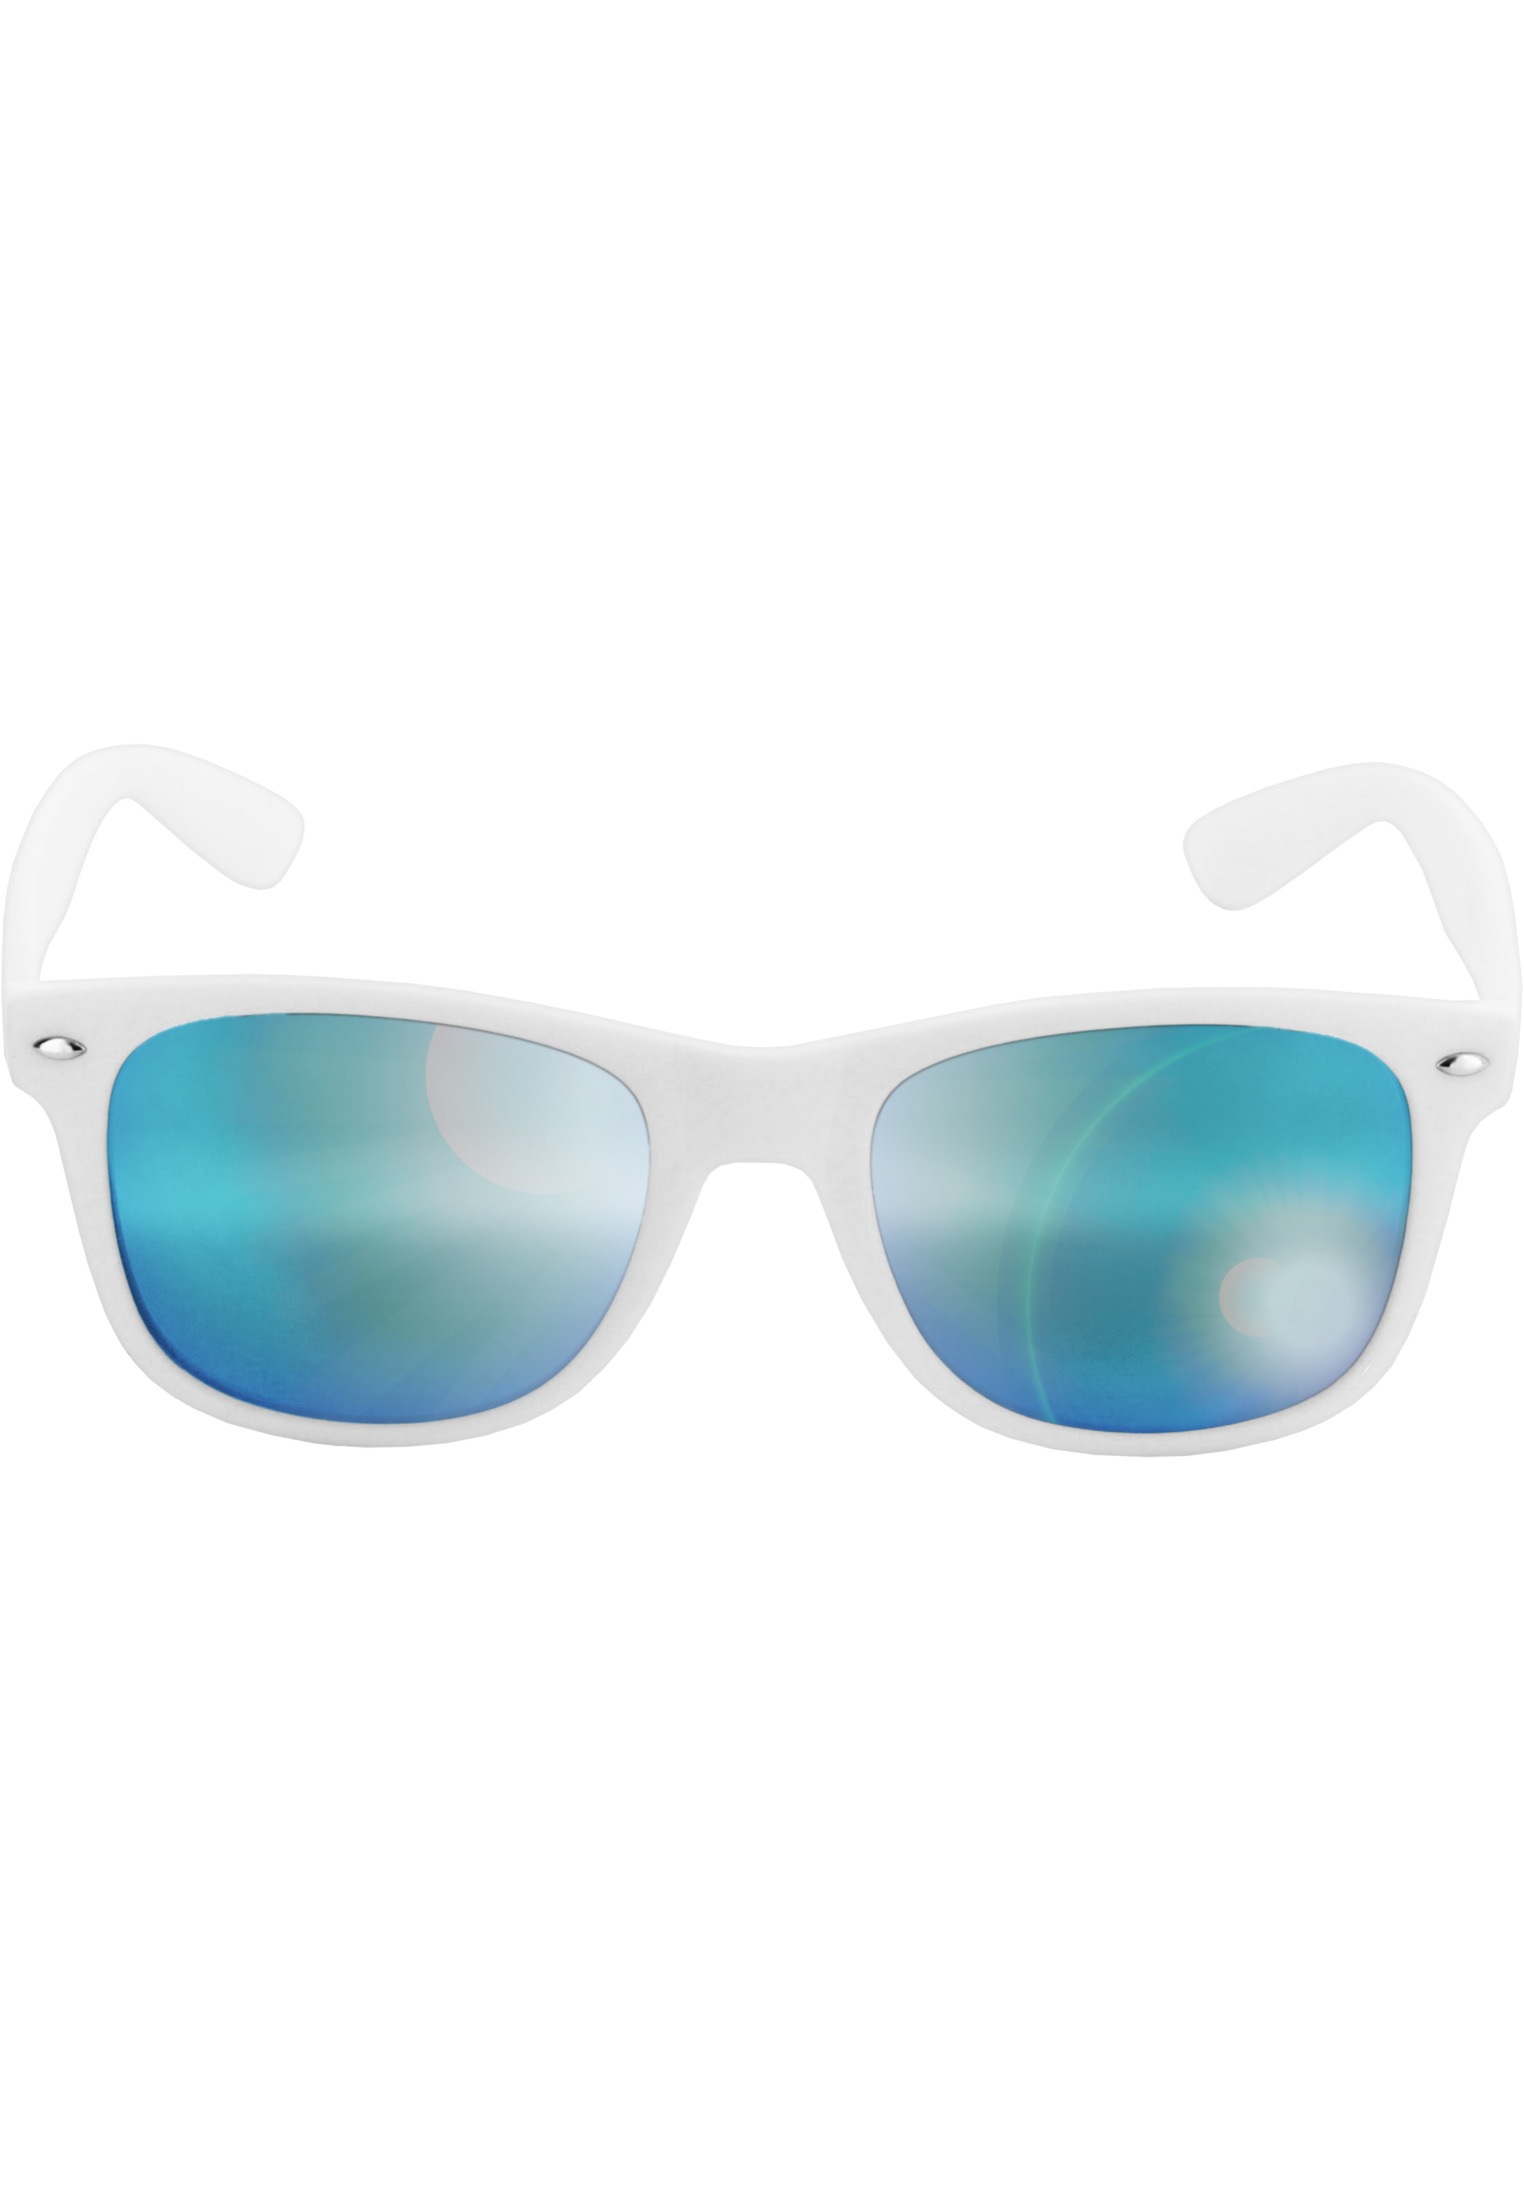 Mirror« Sunglasses online BAUR Likoma bestellen »Accessoires Sonnenbrille MSTRDS |